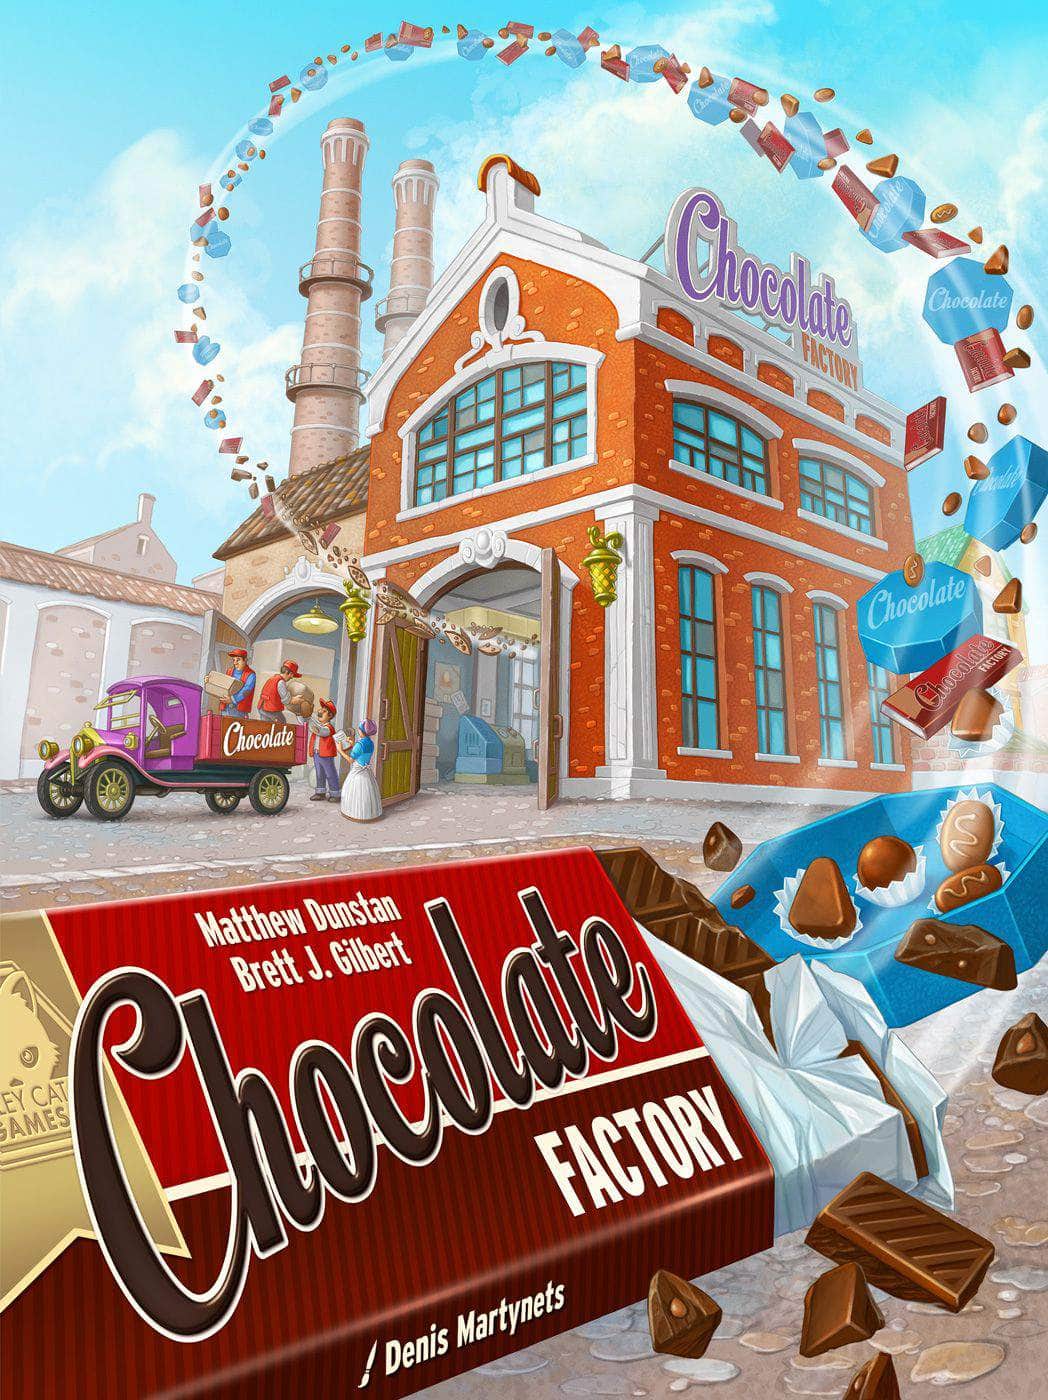 Chocolate Factory (Kickstarter Special) Kickstarter Board Game Alley Cat Games KS800270A